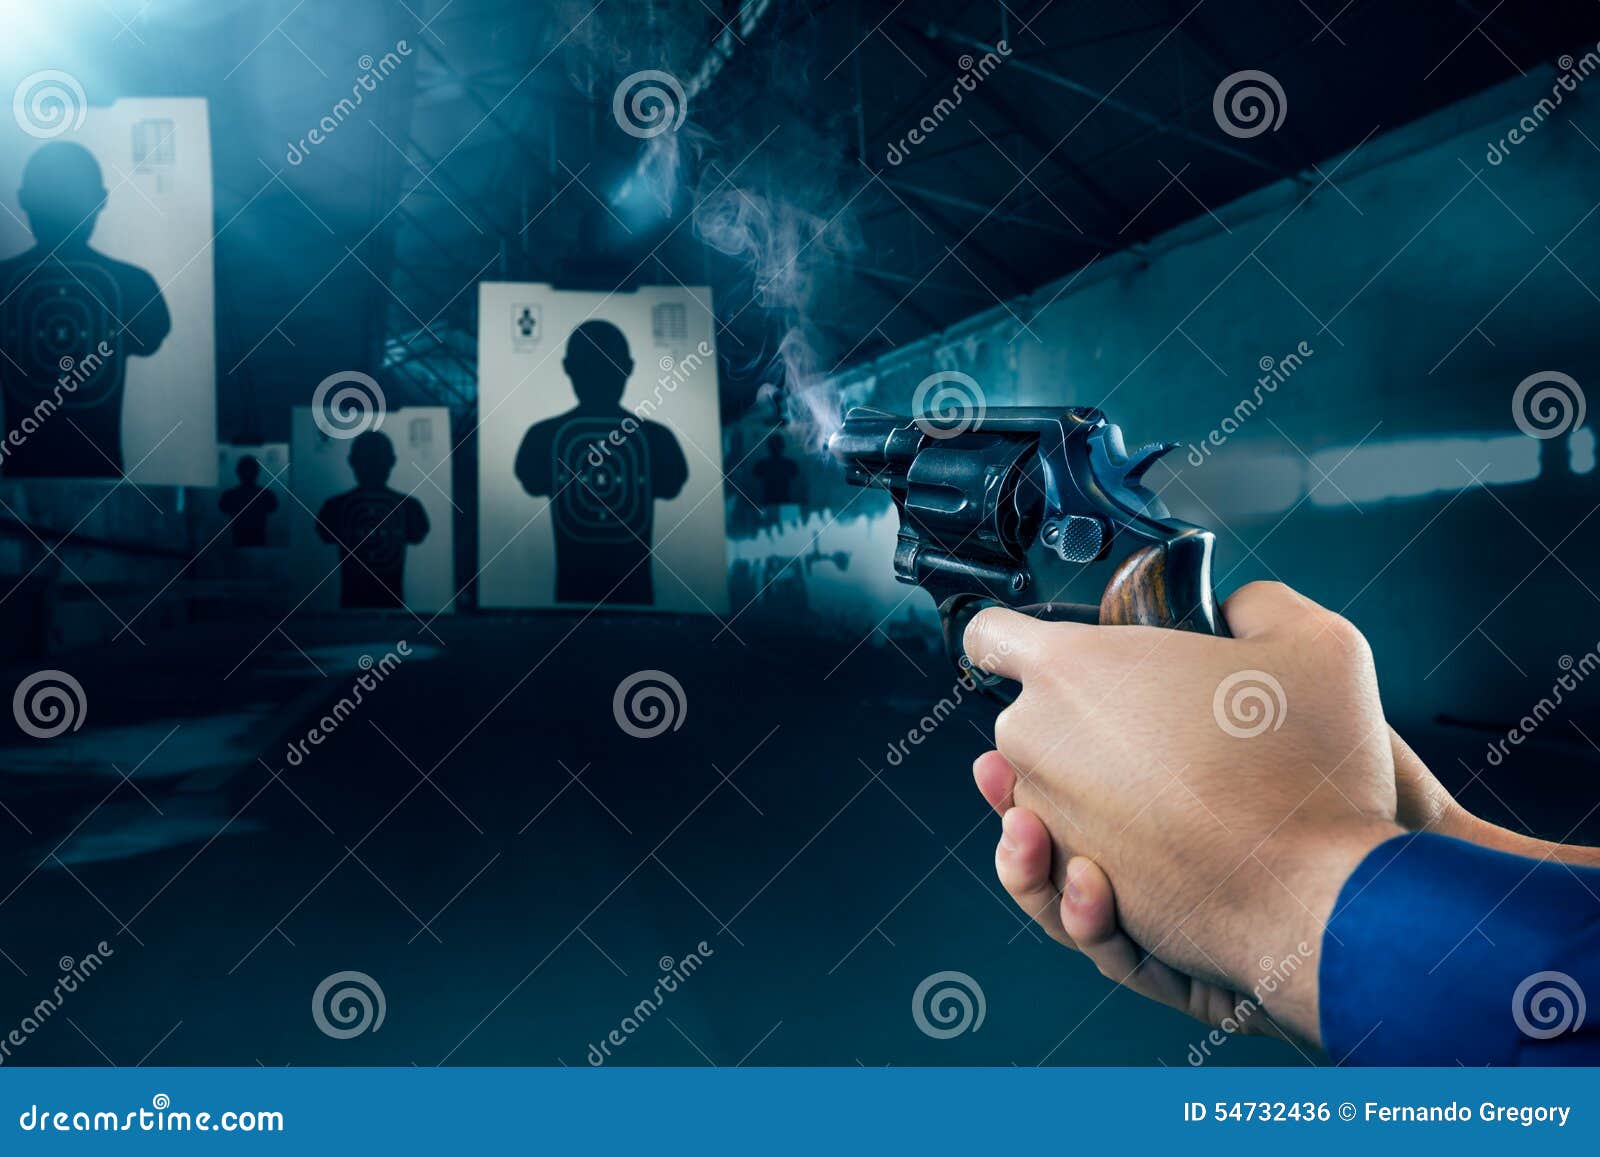 police officer firing a gun at a shooting range / dramatic light